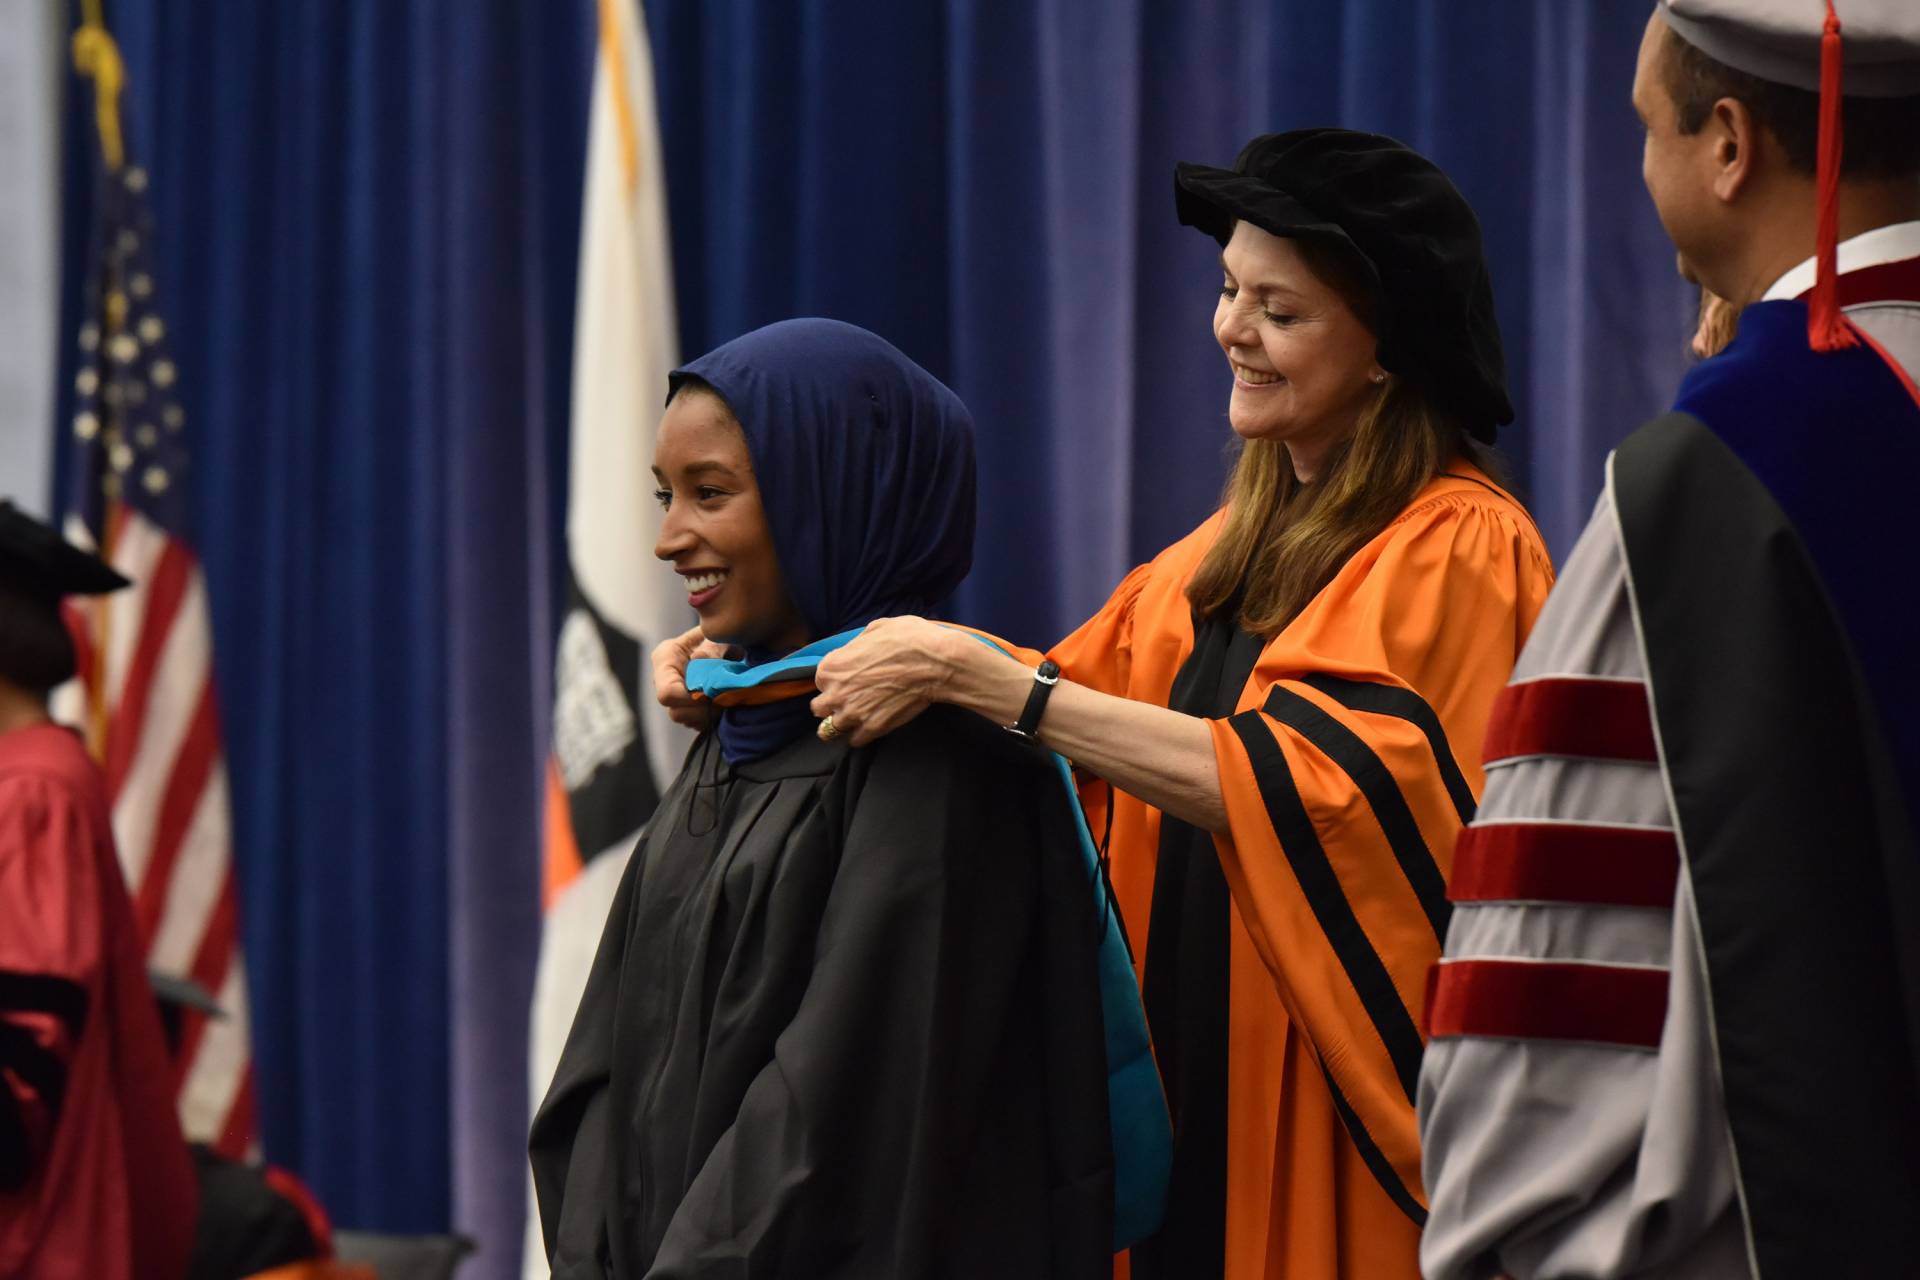 Student receives hood from Professor Bermann